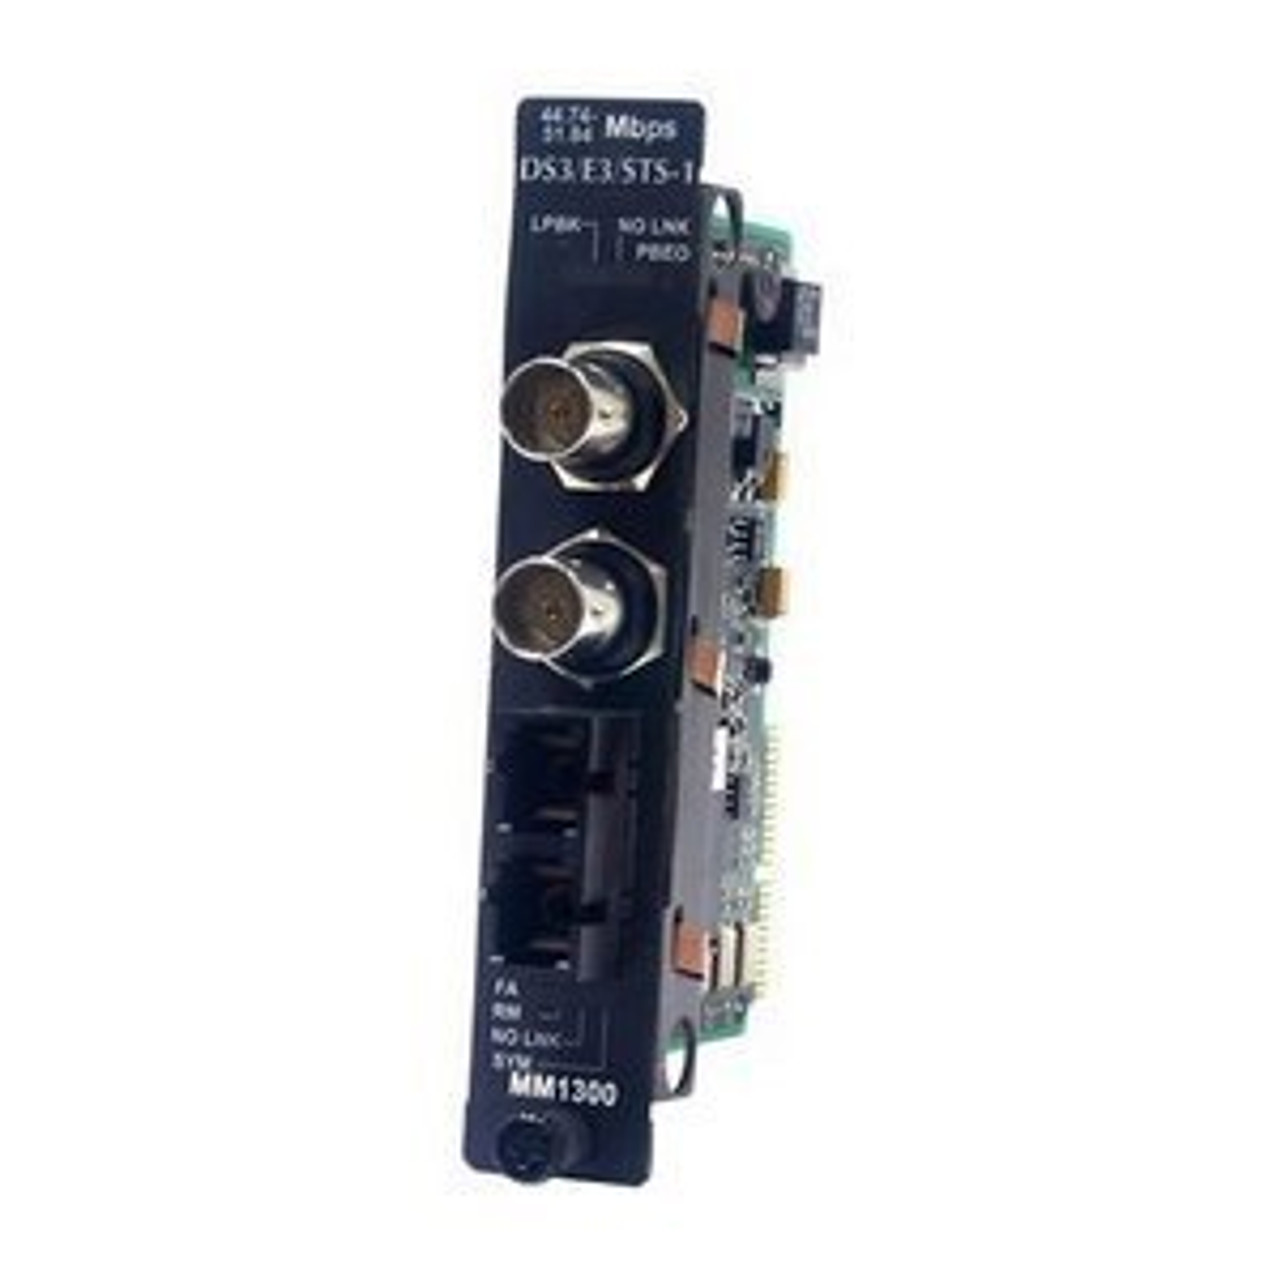 850-14306 IMC DS3/E3/STS-1 Fiber Converter 1 x BNC , 1 x SC DS-3/E-3/STS-1